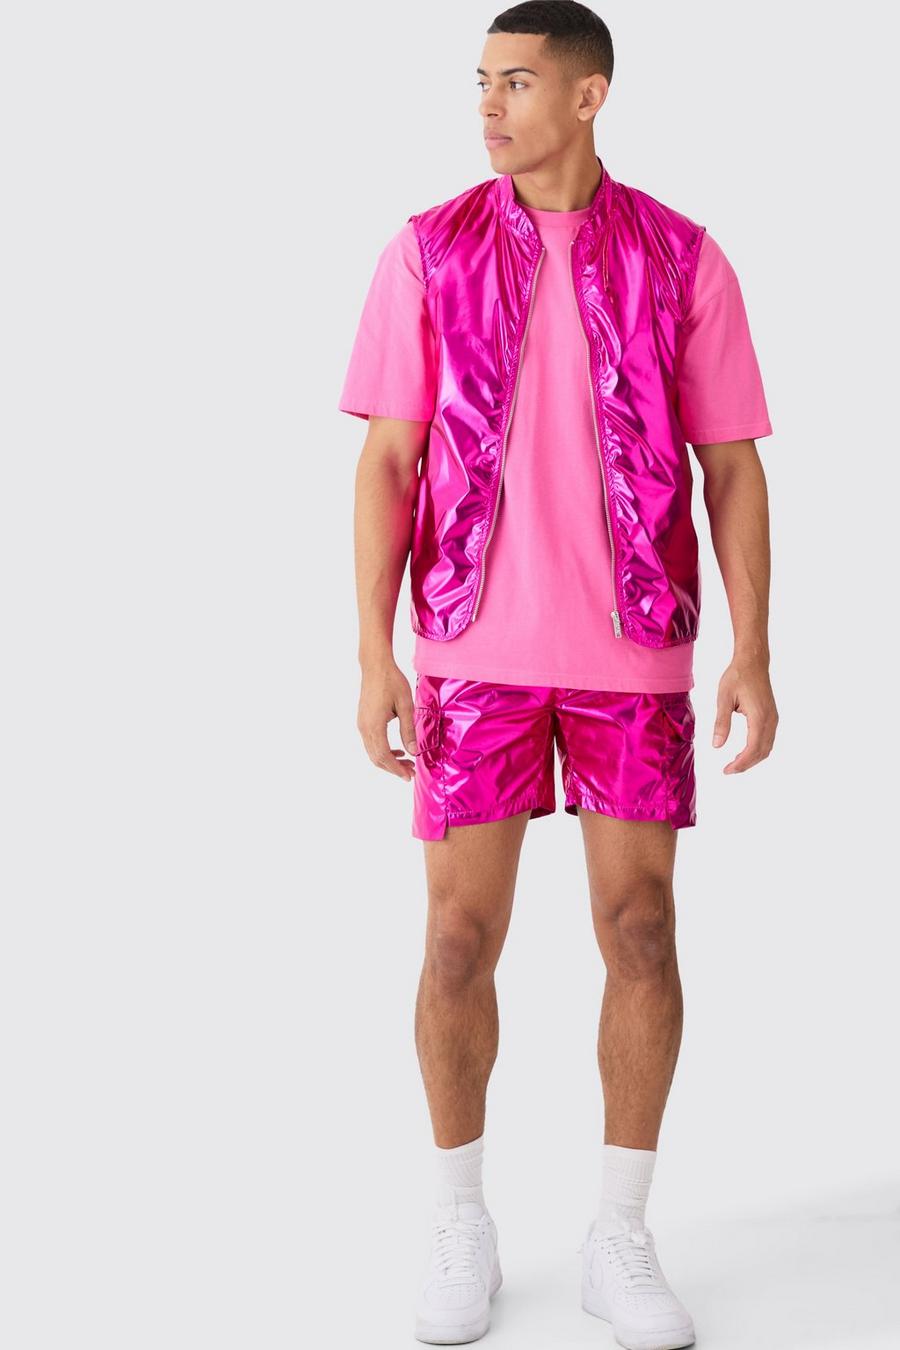 Pink Metallic Vest And Parachute Short Set